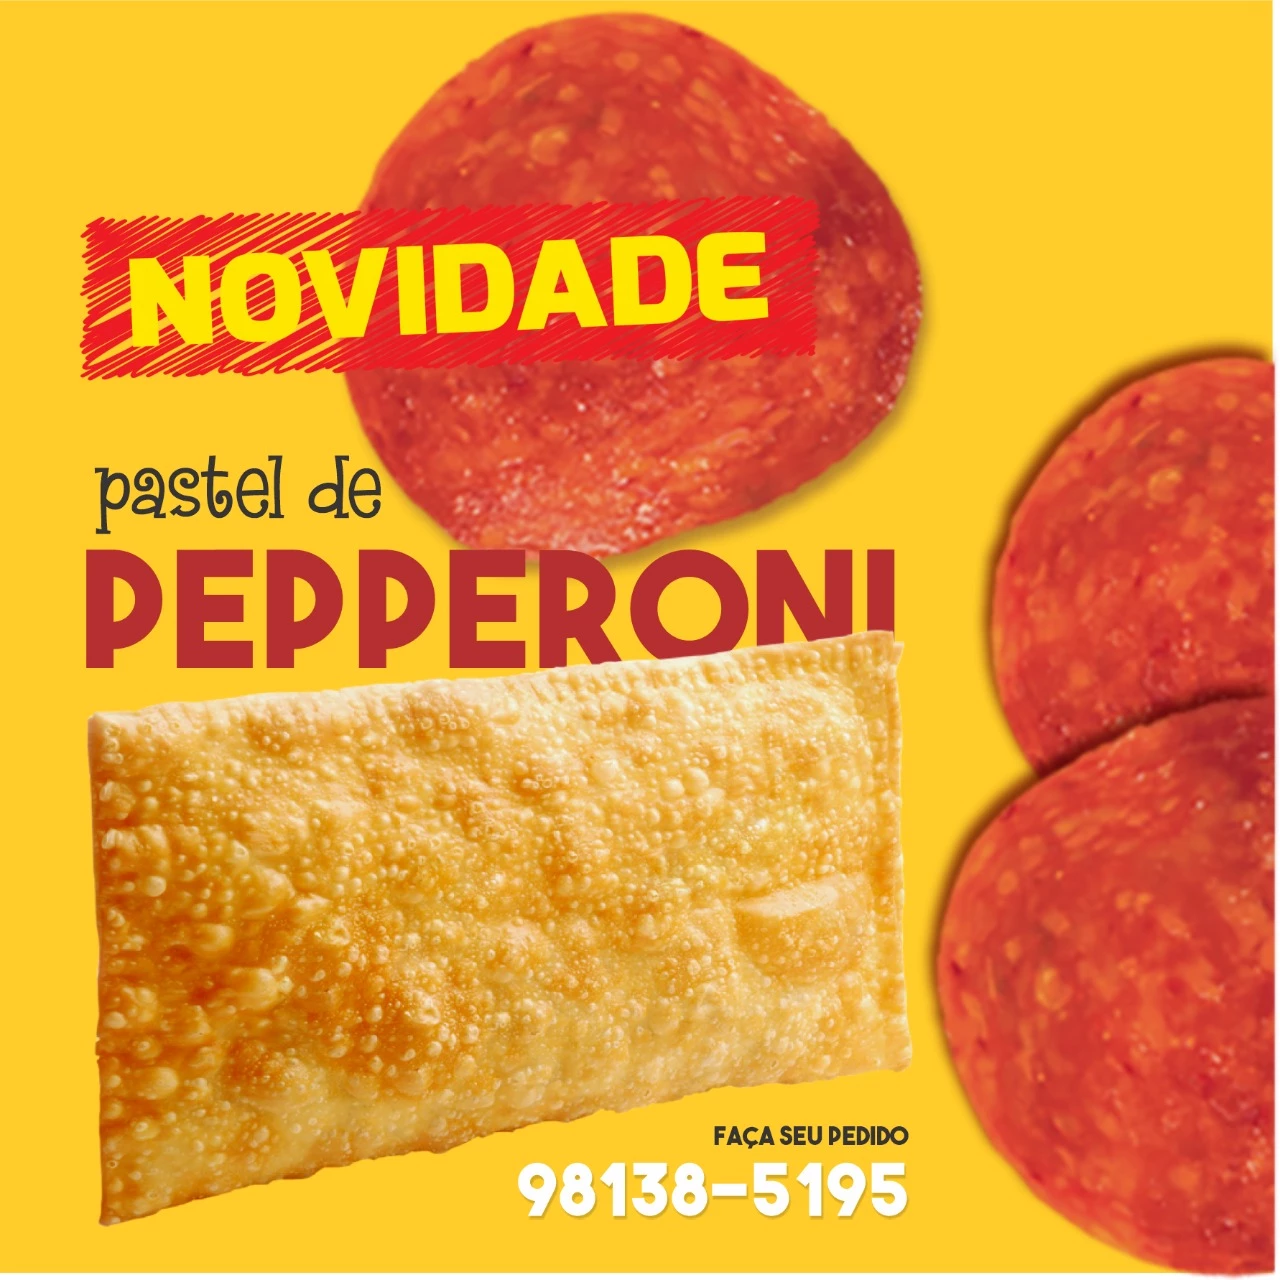 
Propaganda Pastel de Pepperoni



